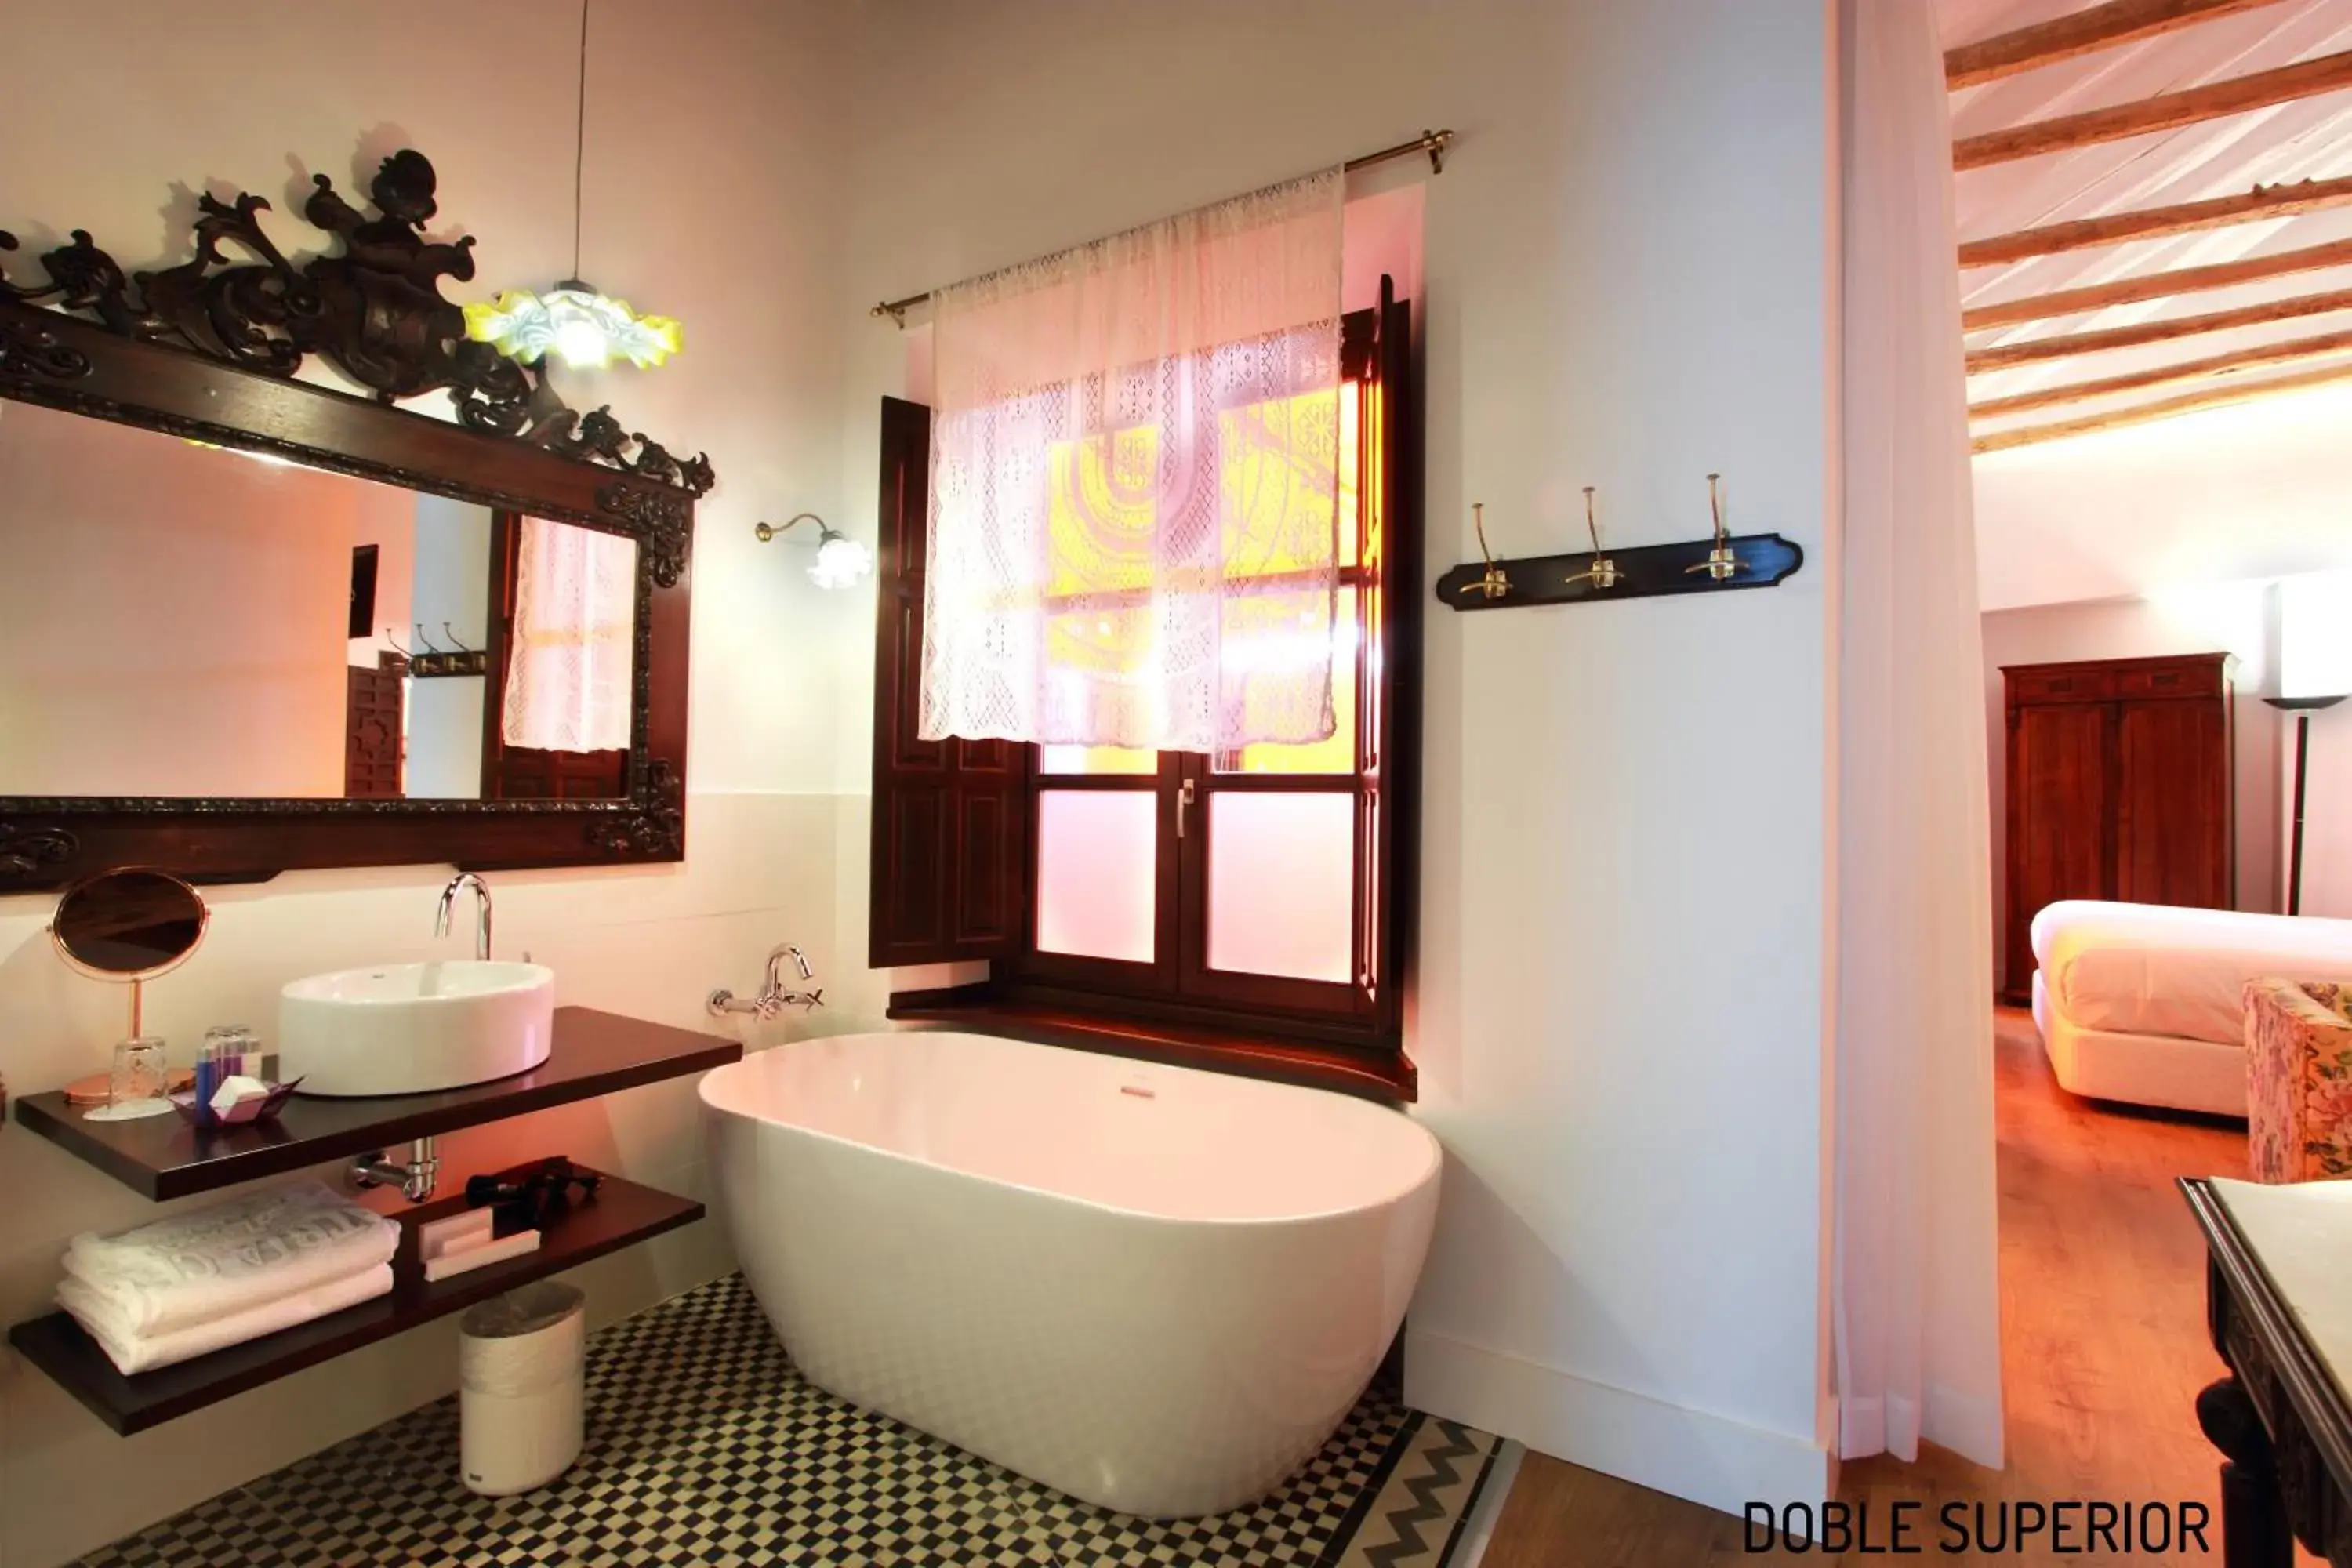 Bathroom in Hotel Patria Chica